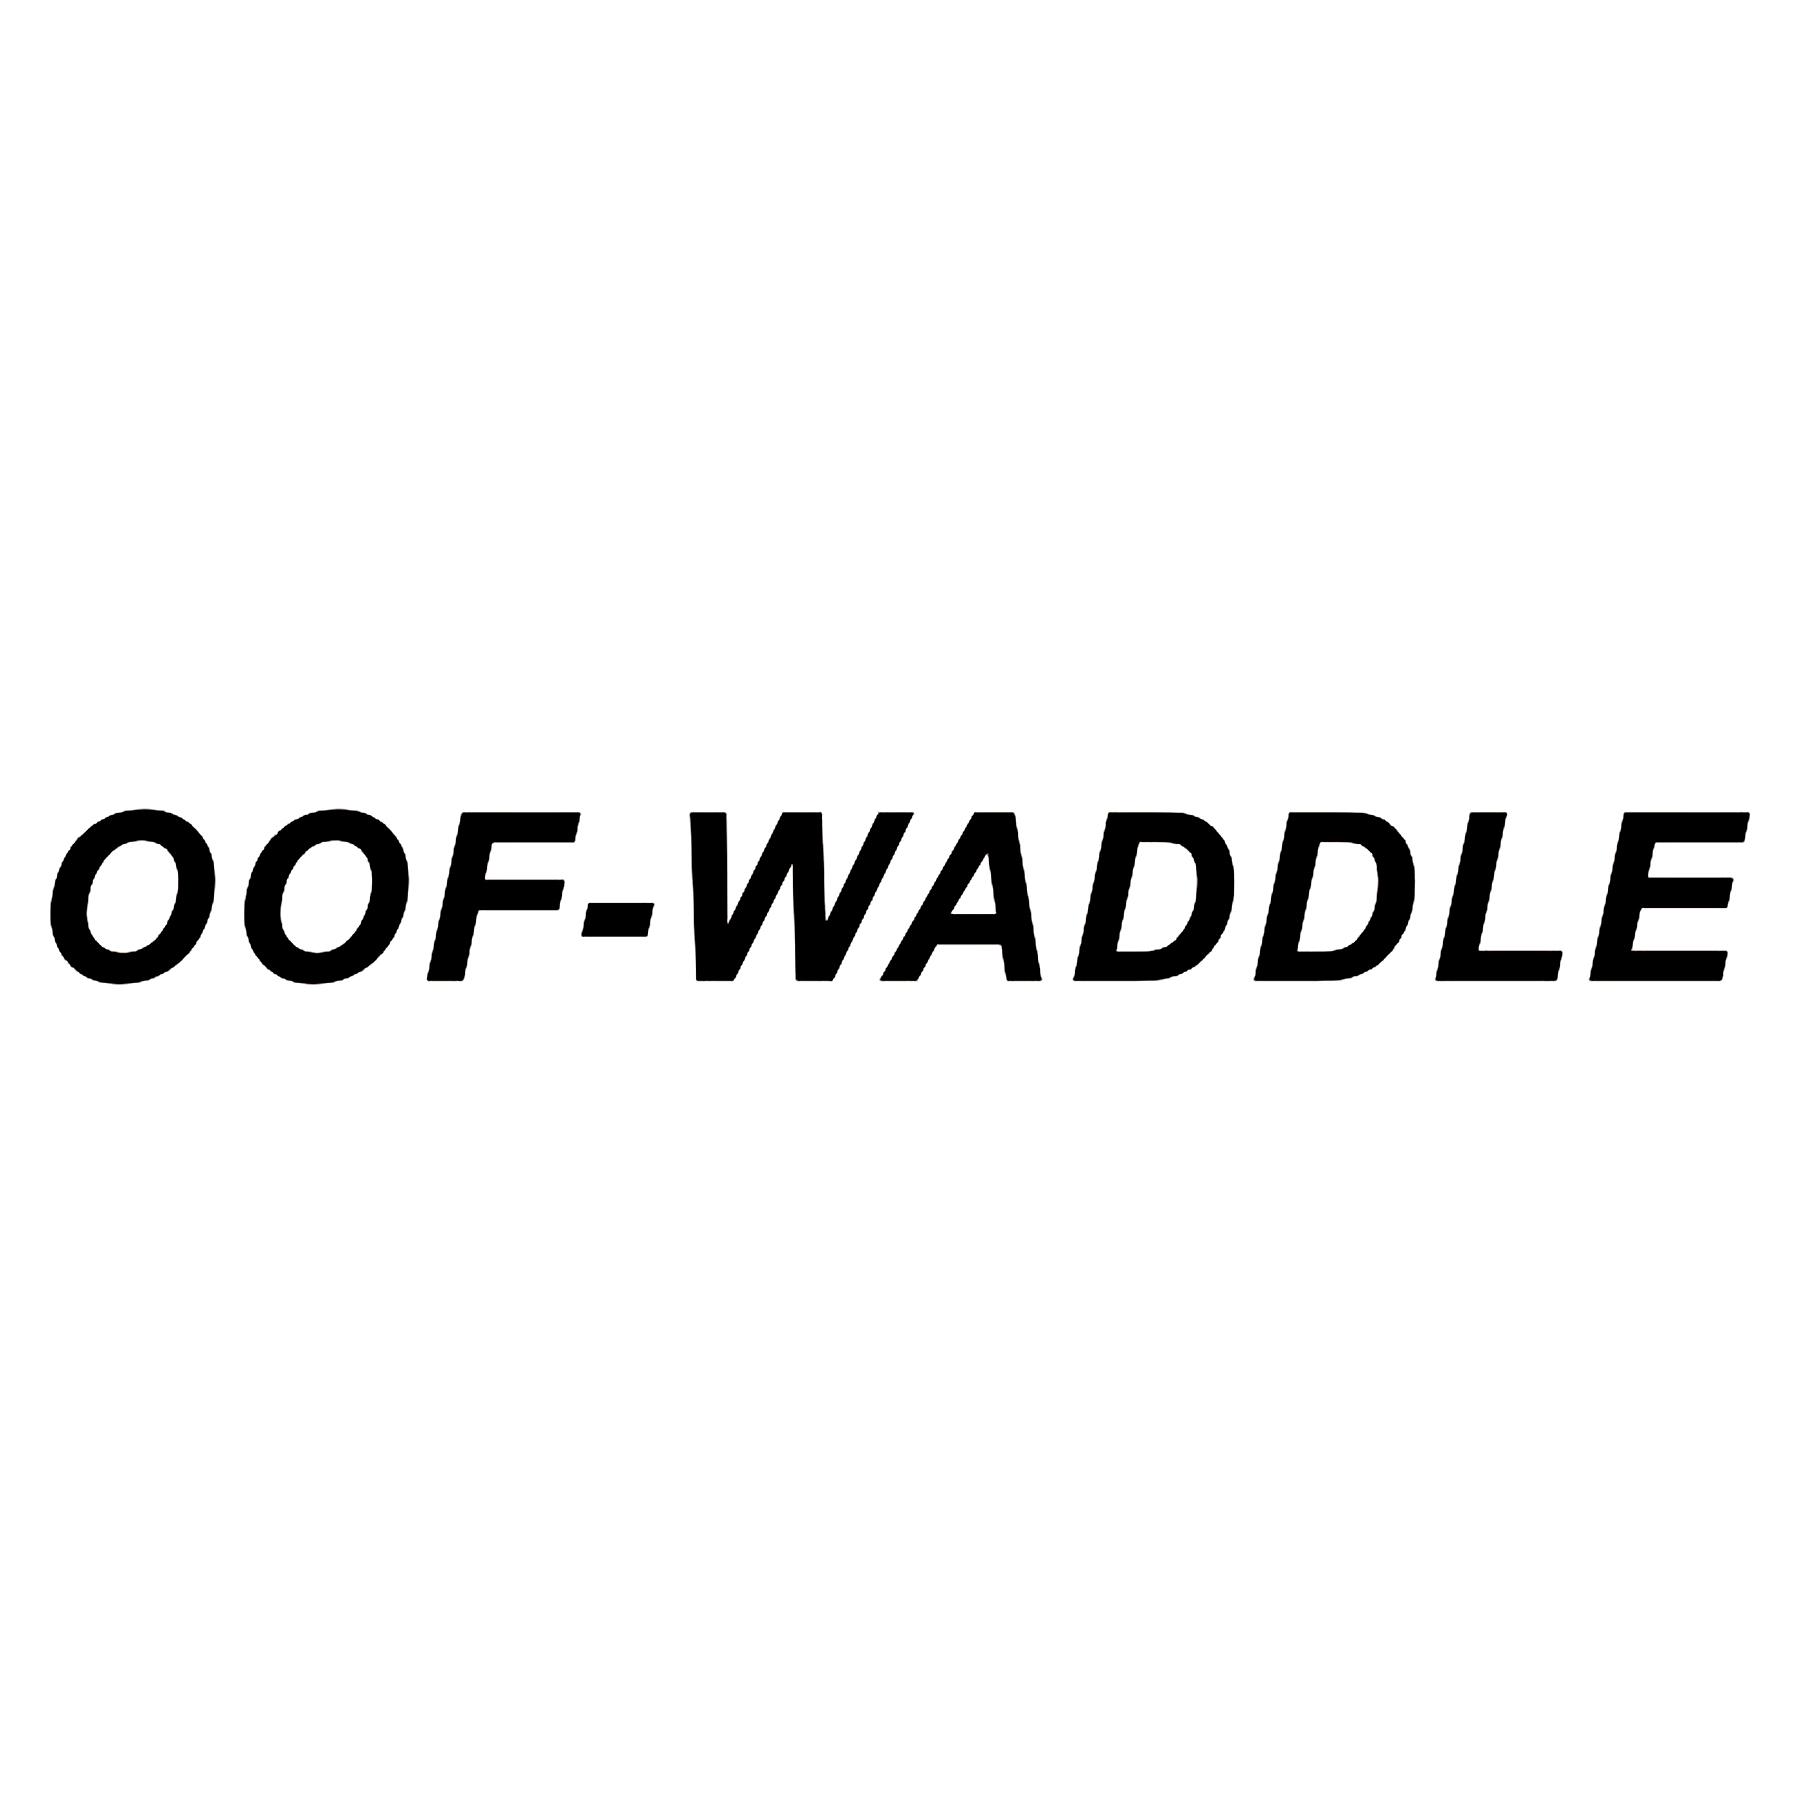 OOF-WADDLE